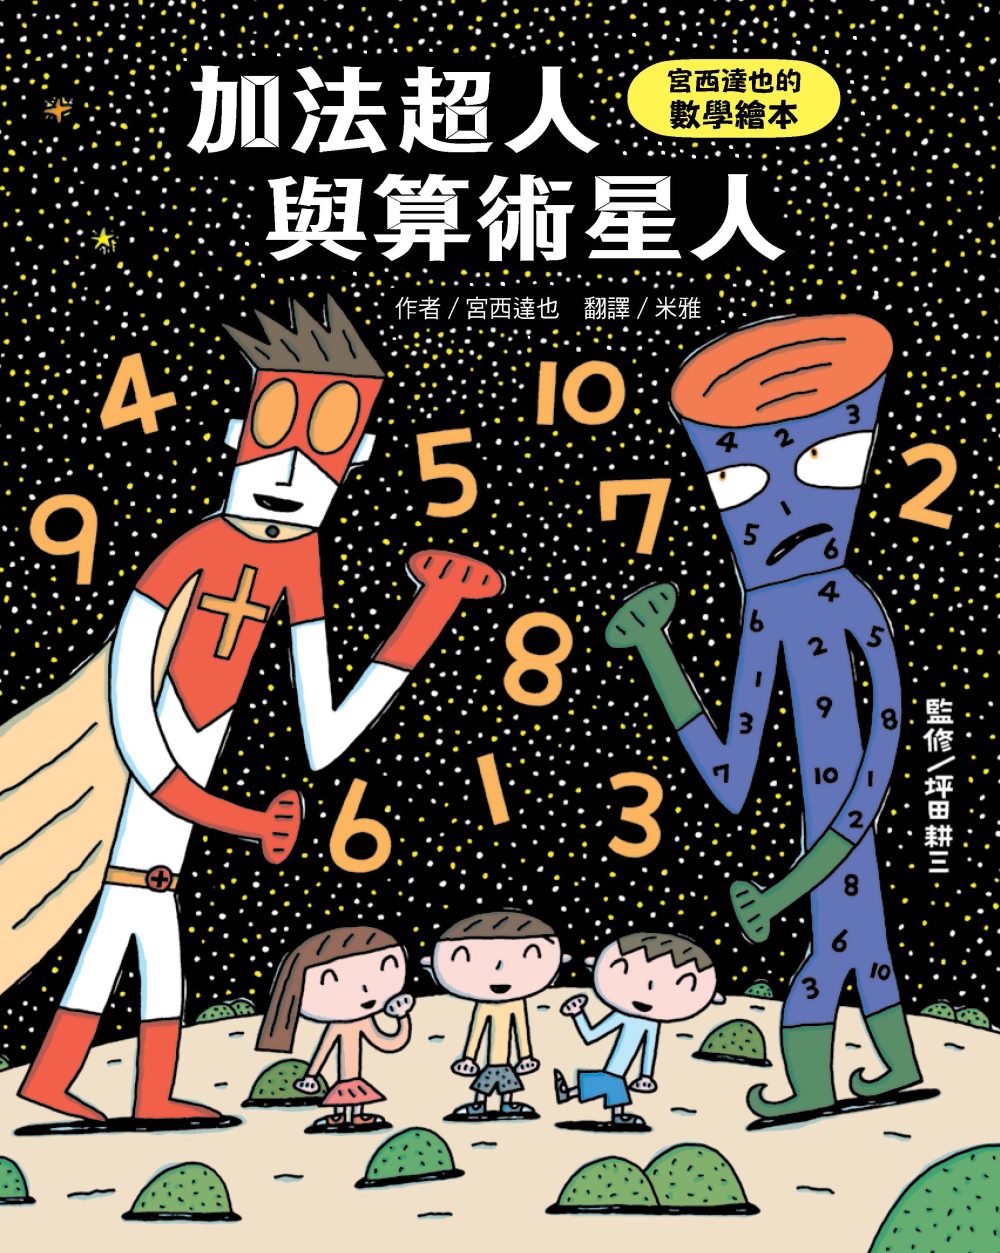 Addition Superhero Meets Arithmetic Alien: A Tatsuya Miyanishi Book on Math • 加法超人與算術星人：宮西達也的數學繪本